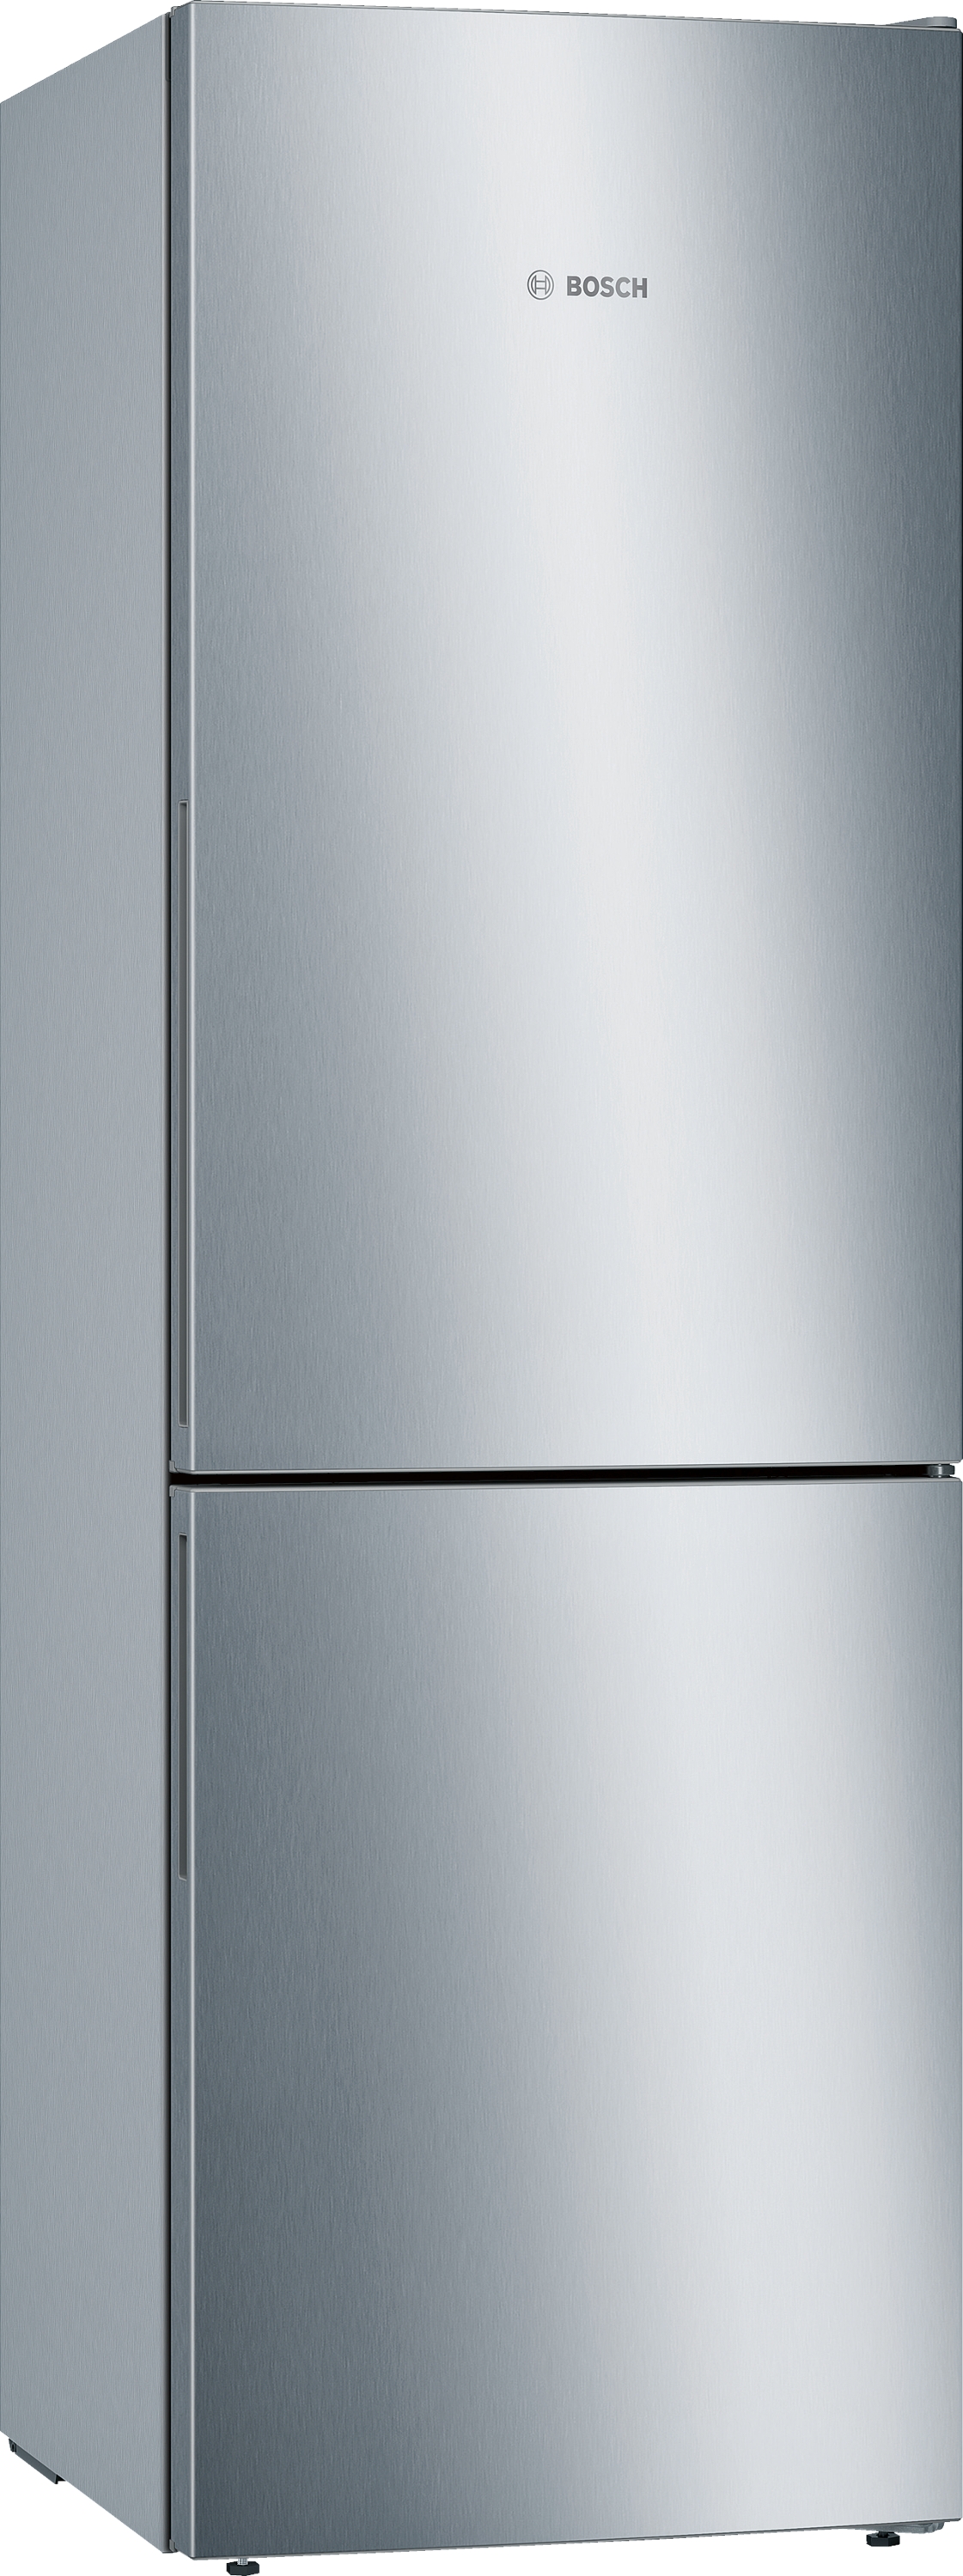 KGE36ALCA Combina frigorifica independenta 186 x 60 cm InoxLook 5 ANI GARANTIE. Clasa Energetica C